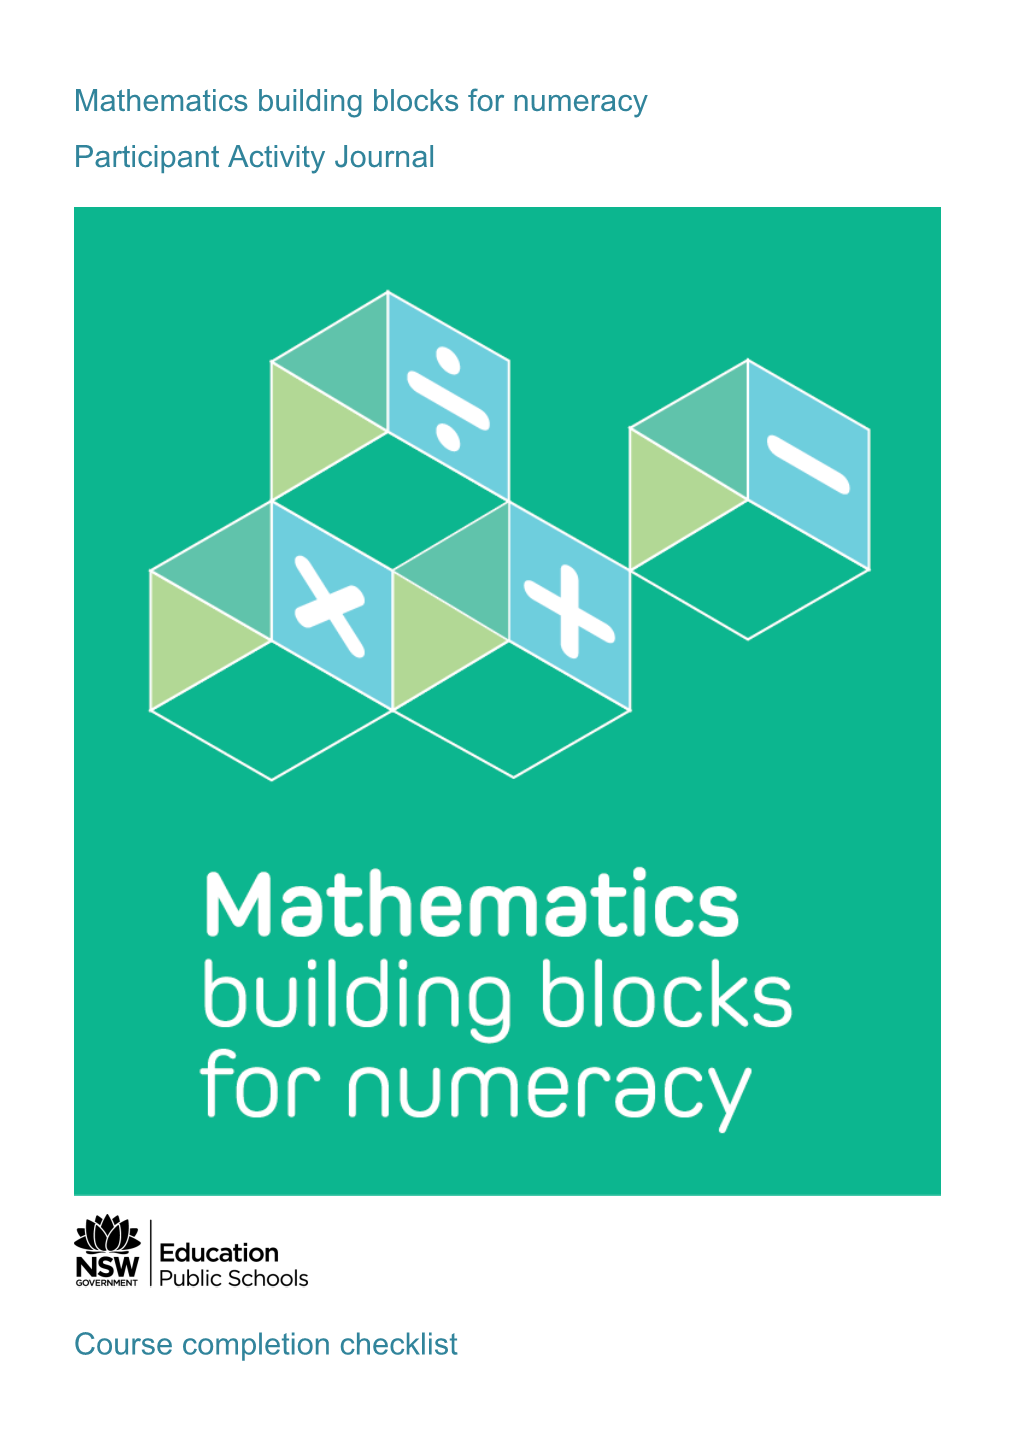 Mathematics Building Blocks for Numeracy